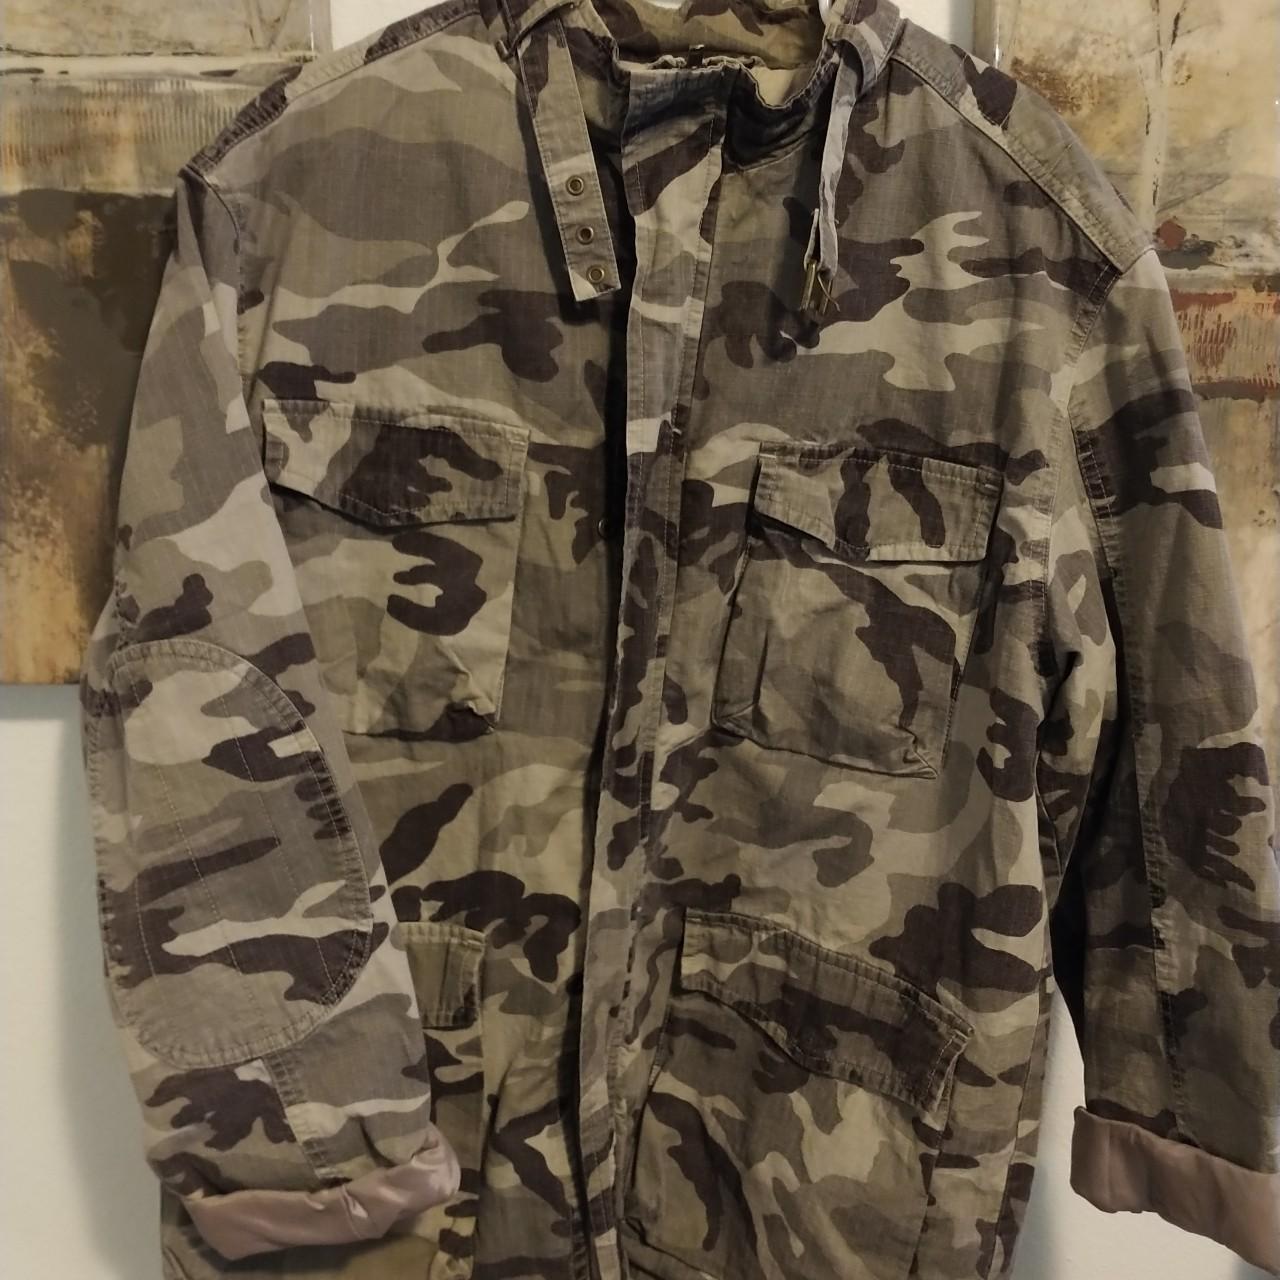 Product Image 2 - River island camouflage jacket great